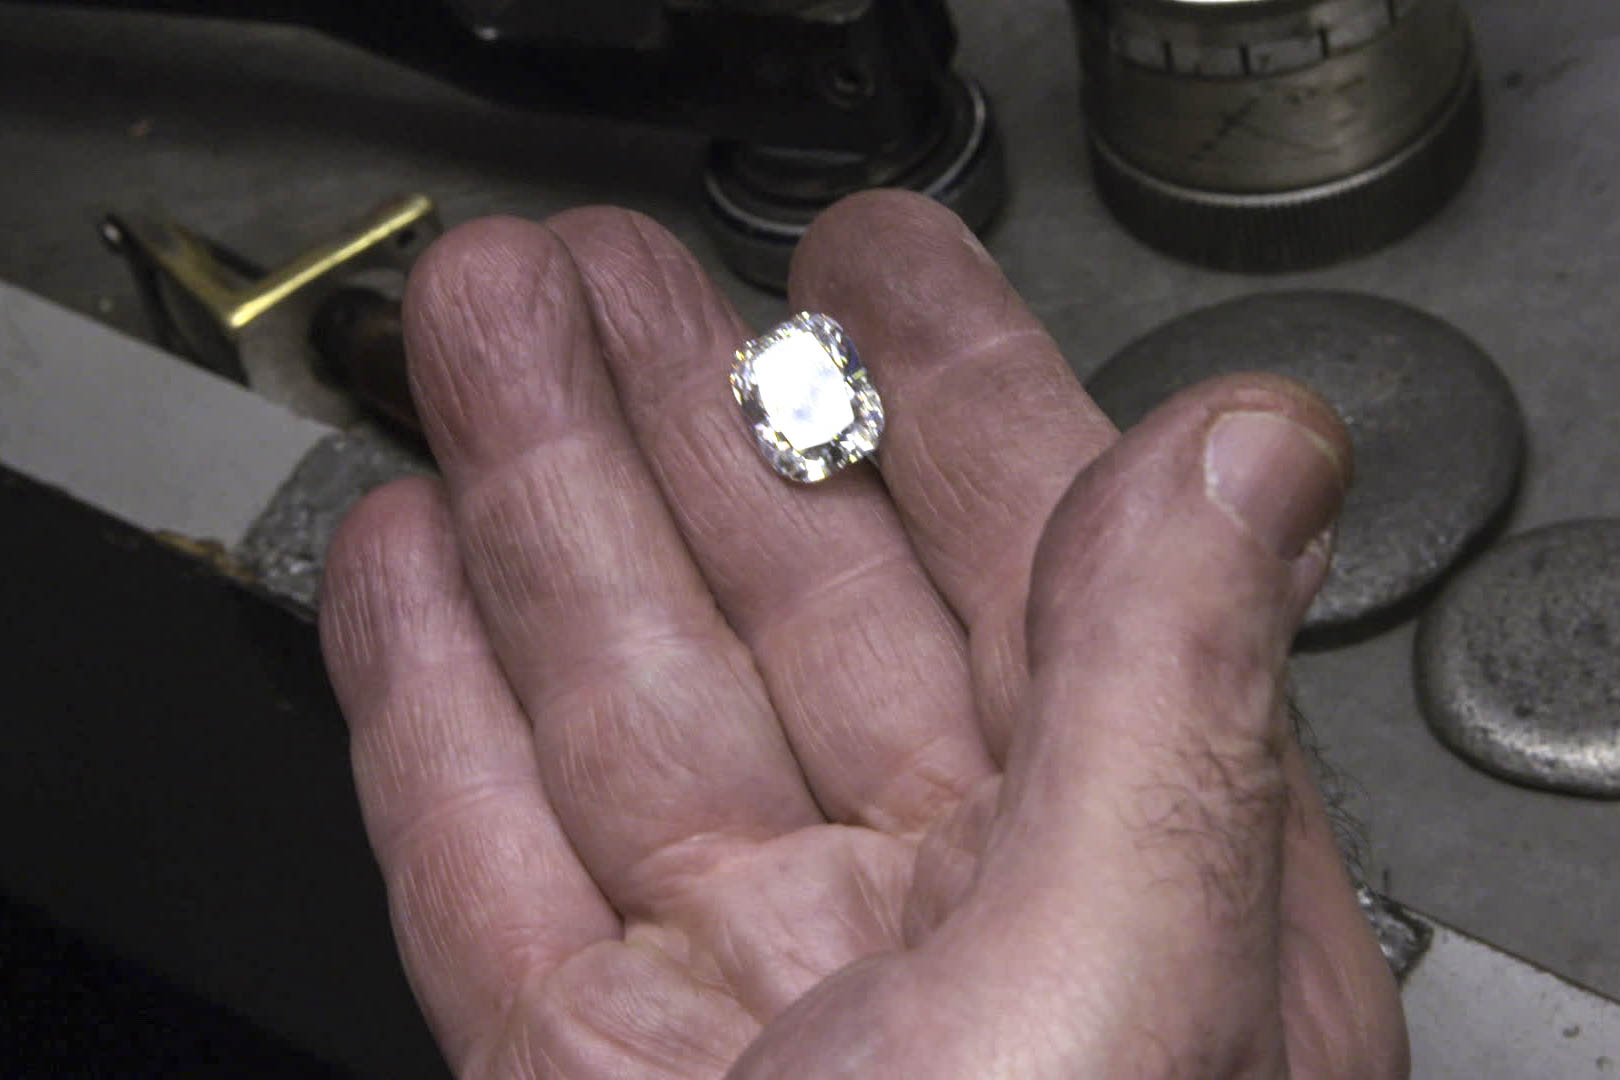 How Do You Cut a Massive, 404-Carat Diamond?